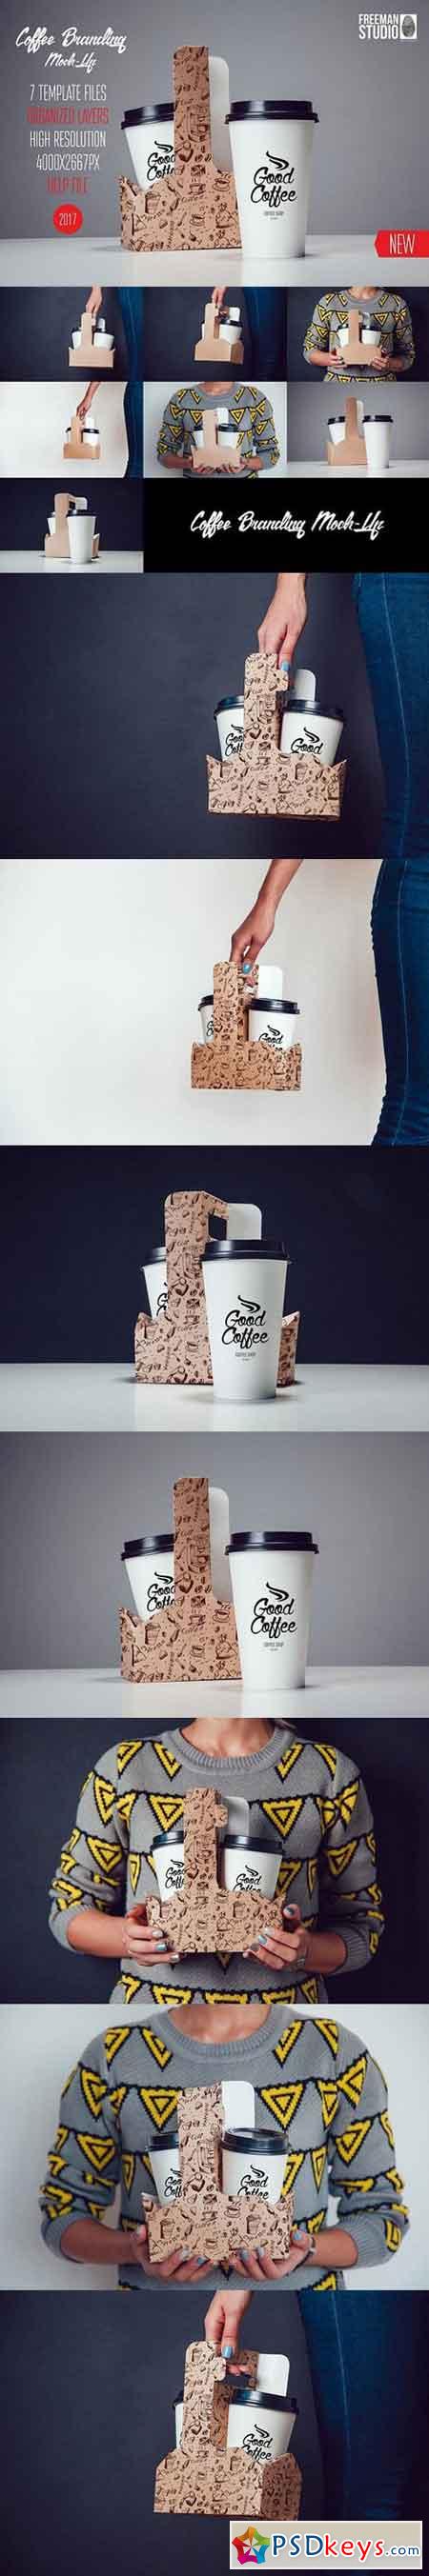 Coffee Branding Mock-Up Vol. 4 1265255